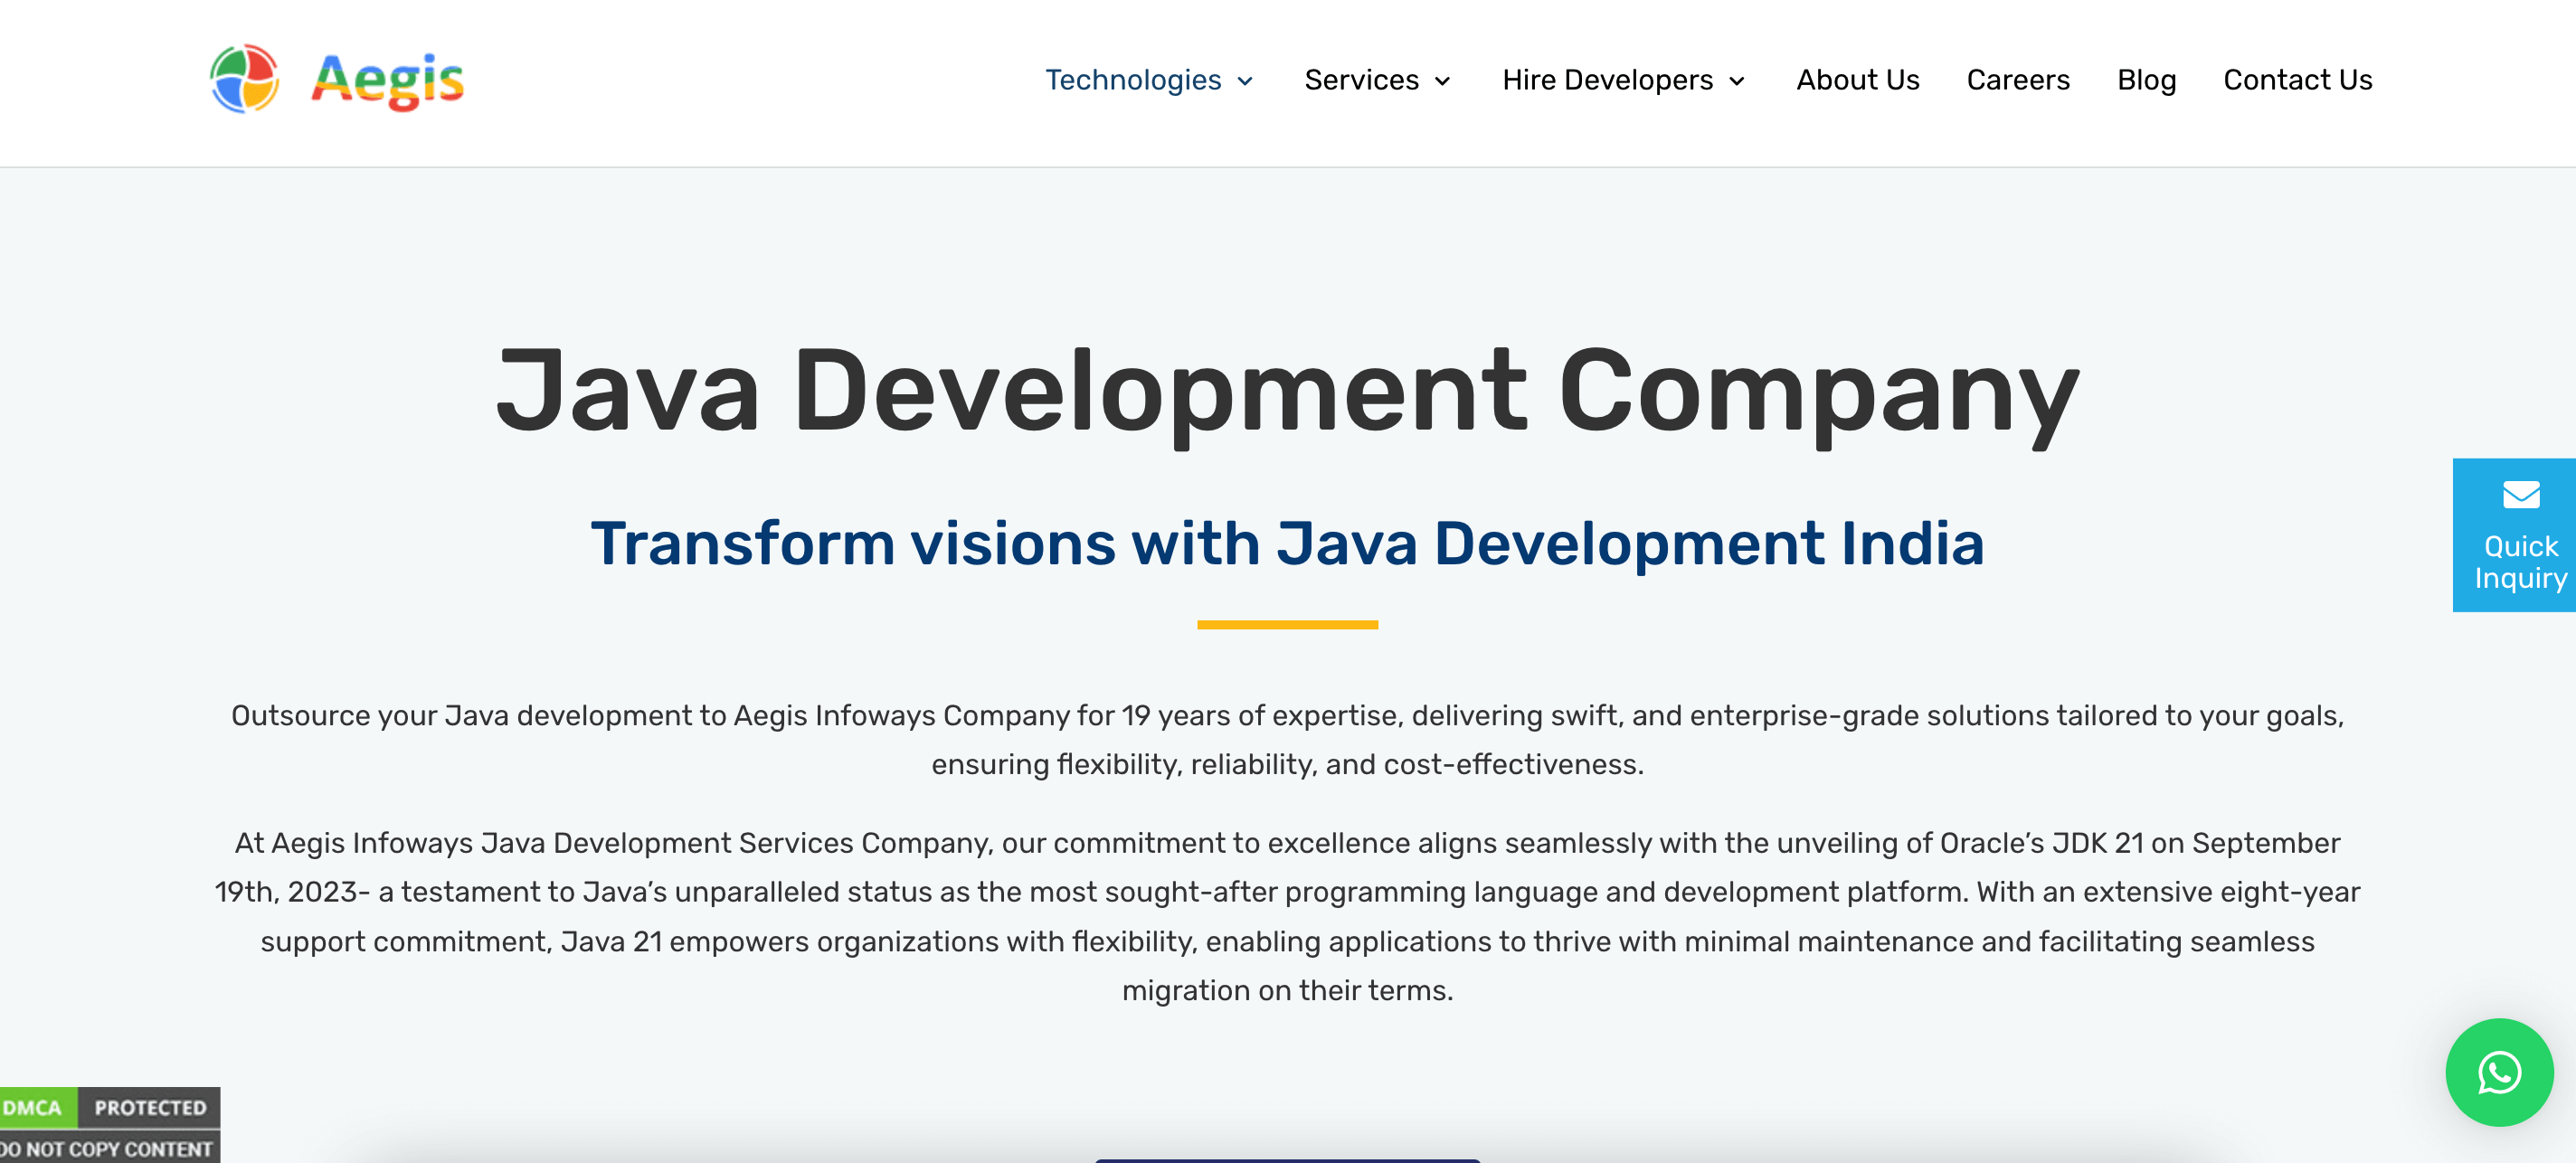 Top Java Development Companies